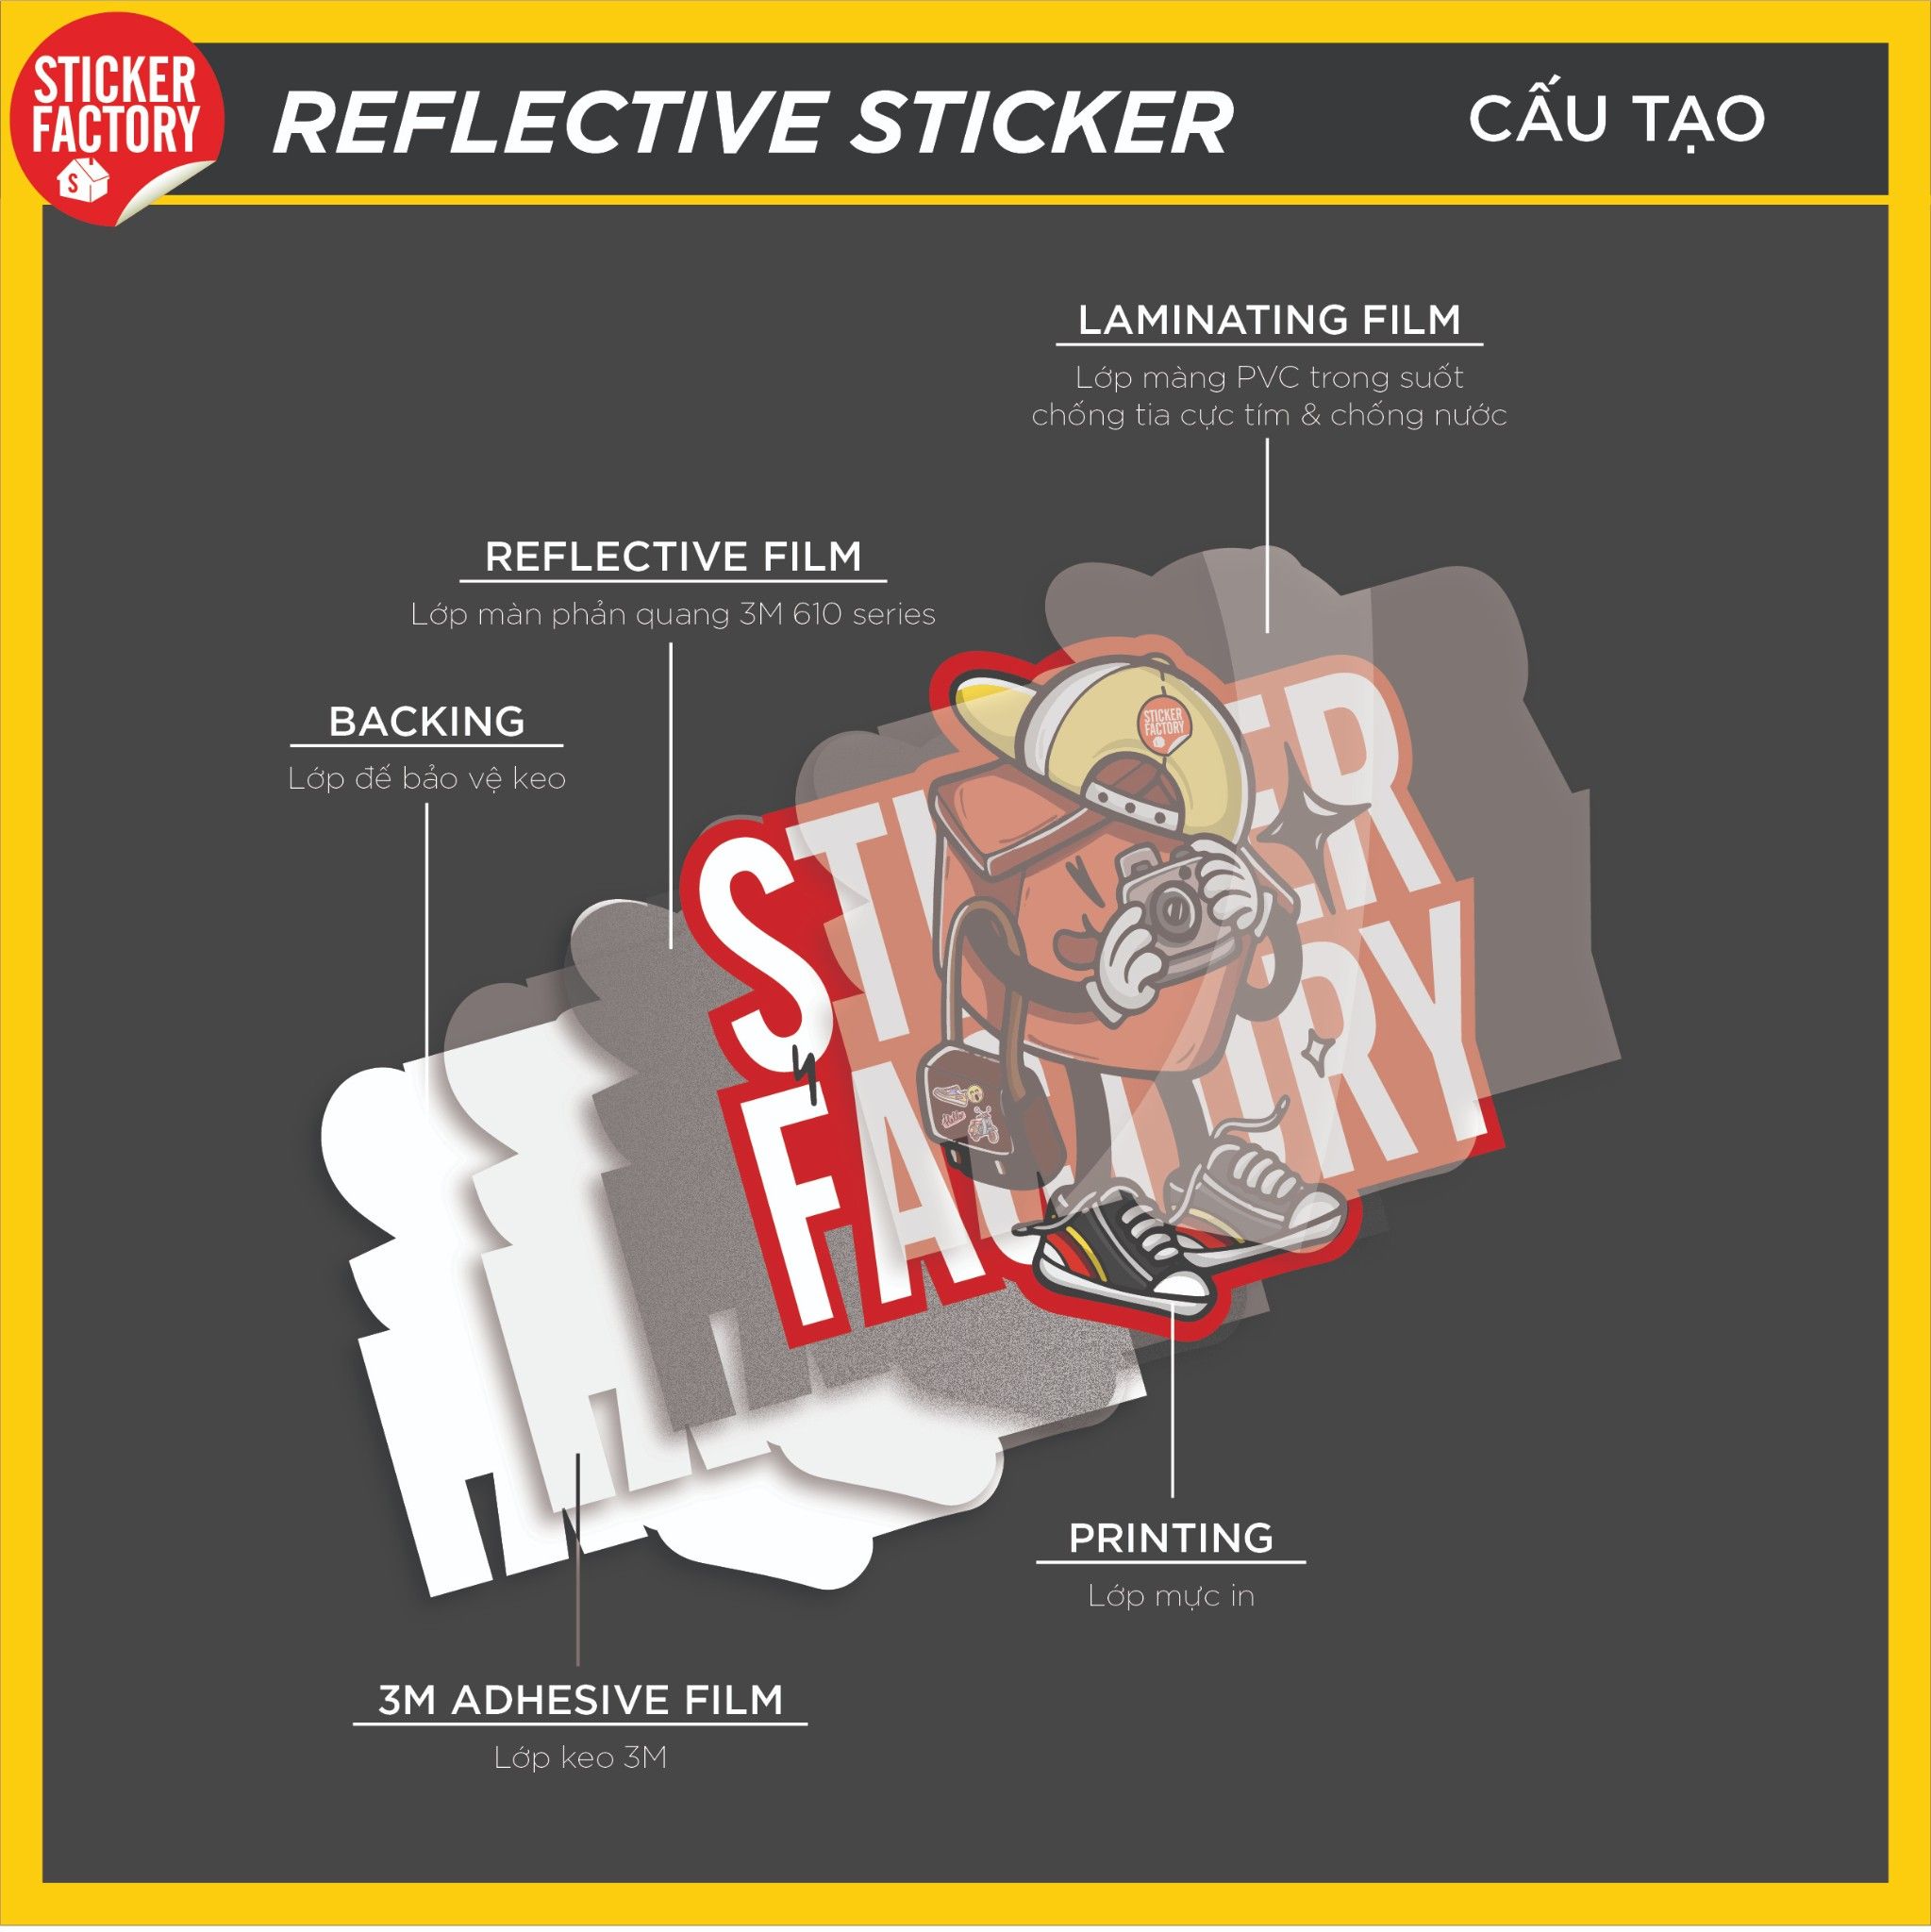 Reflective sheet sticker - Sticker tấm cắt bế phản quang 3M